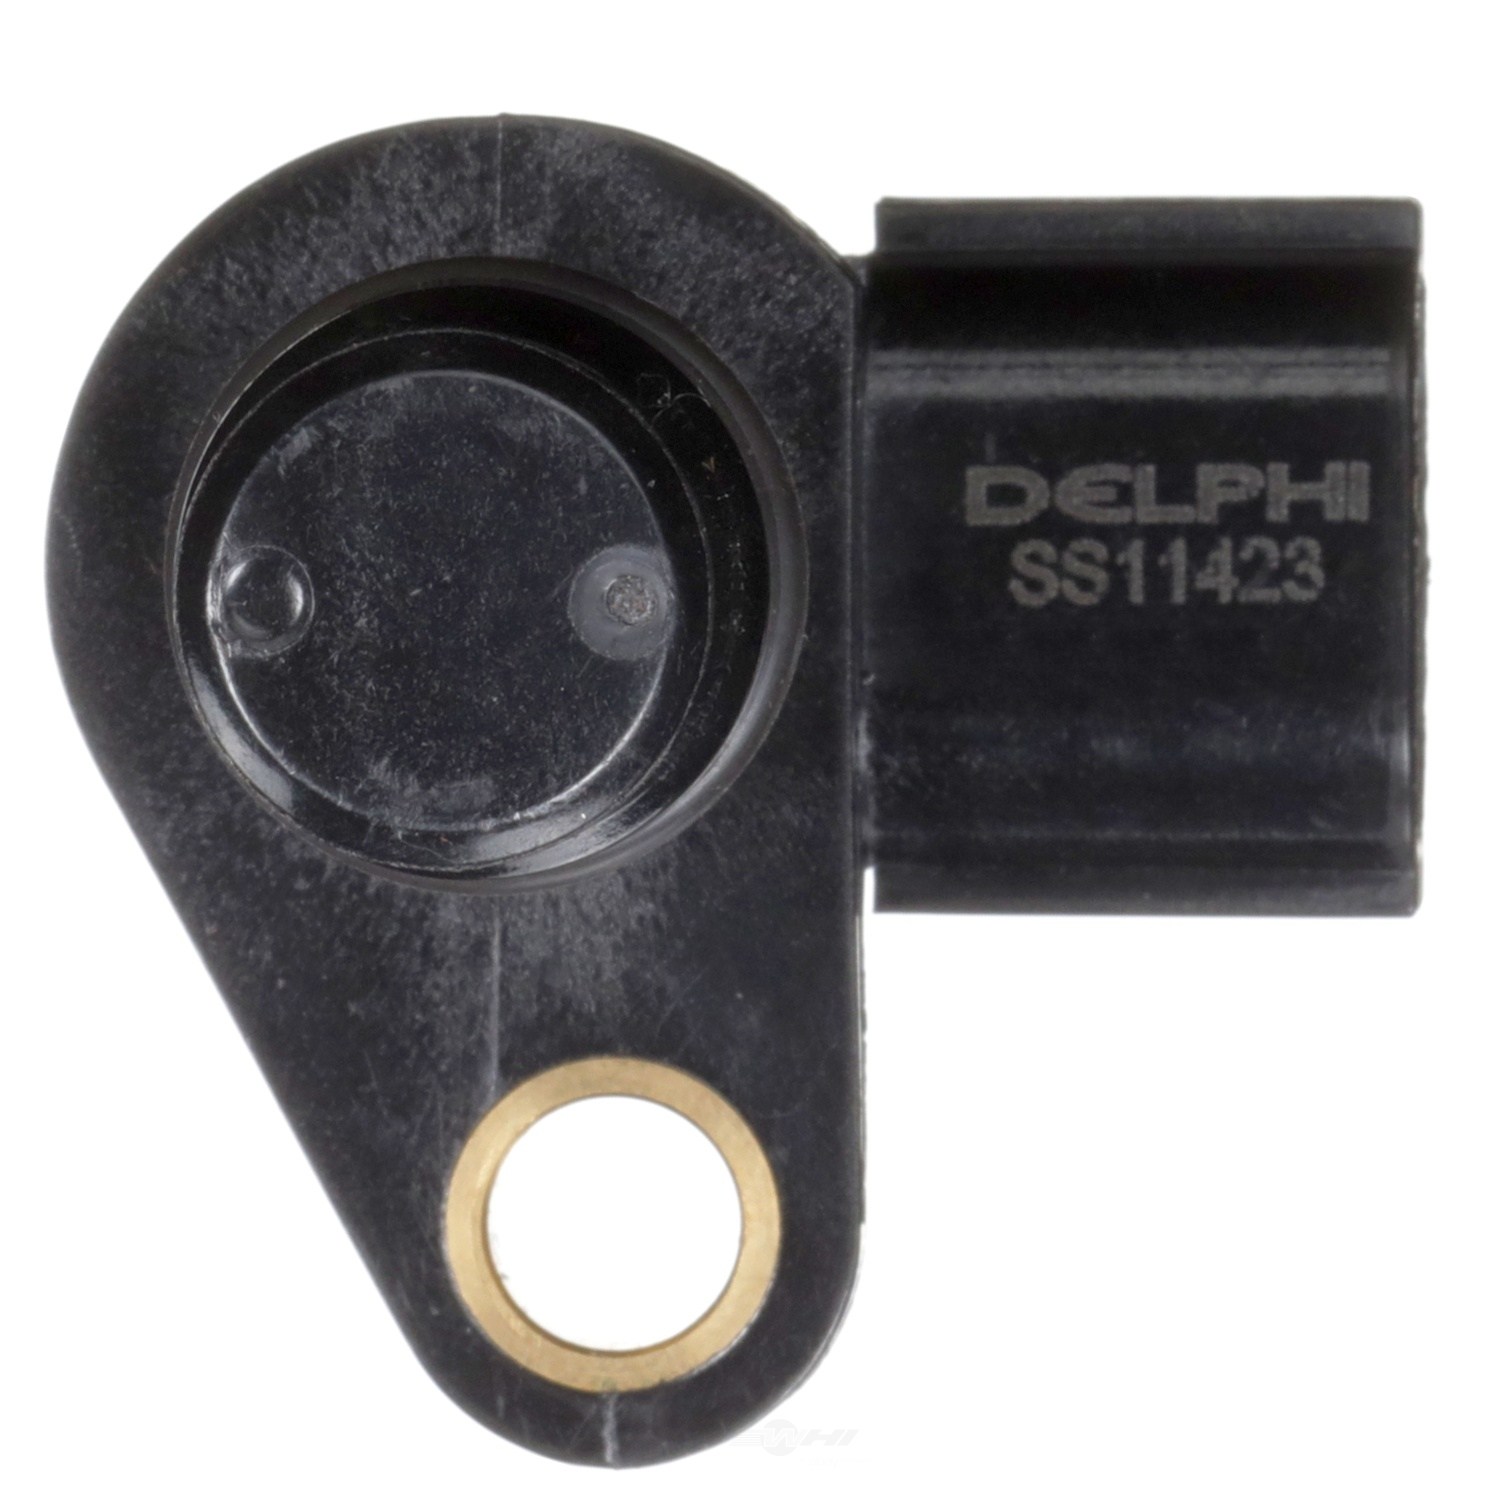 DELPHI - Vehicle Speed Sensor - DPH SS11423